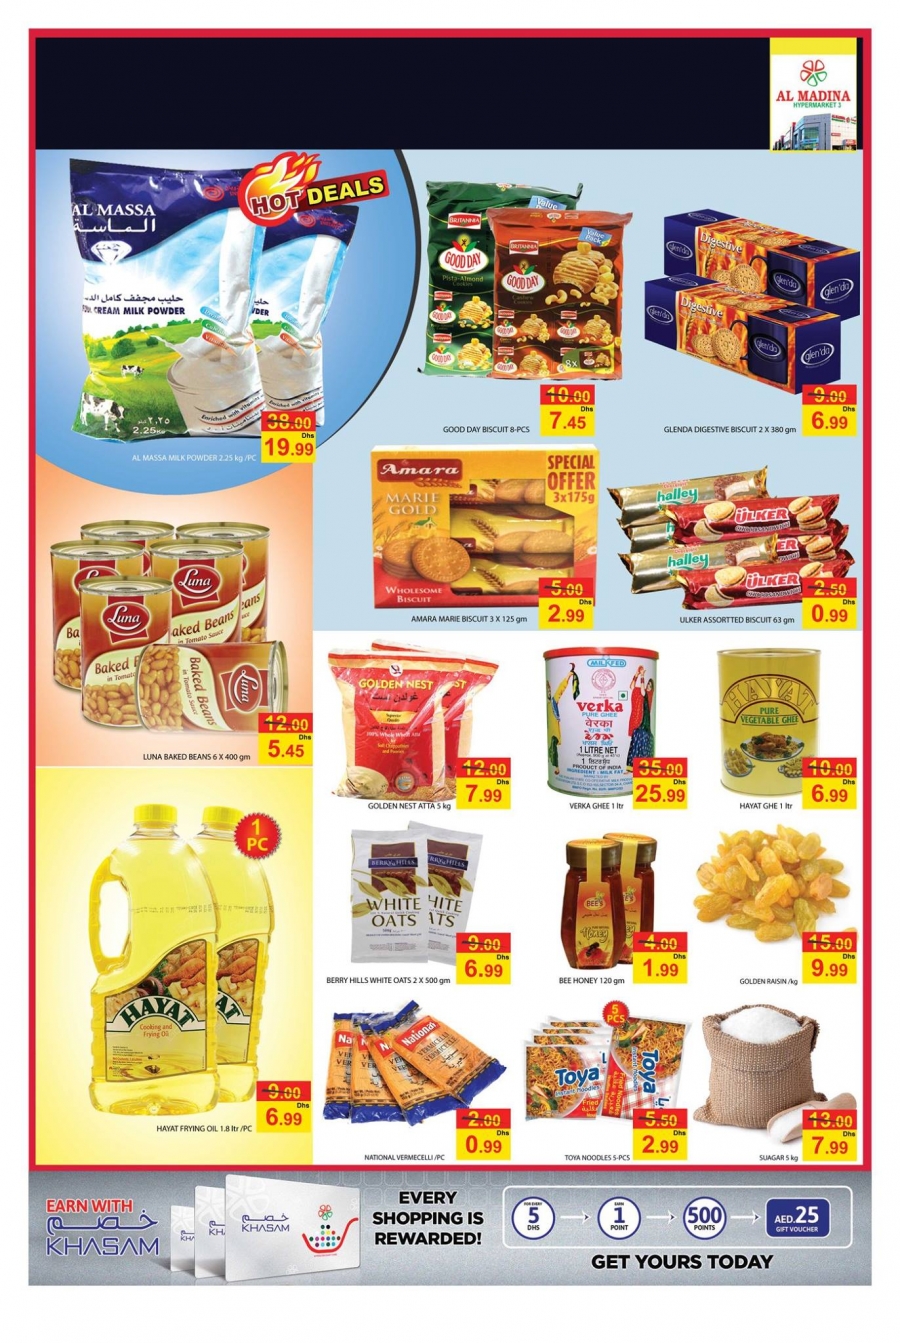  Al Madina Hypermarket 7 Days Big Deal